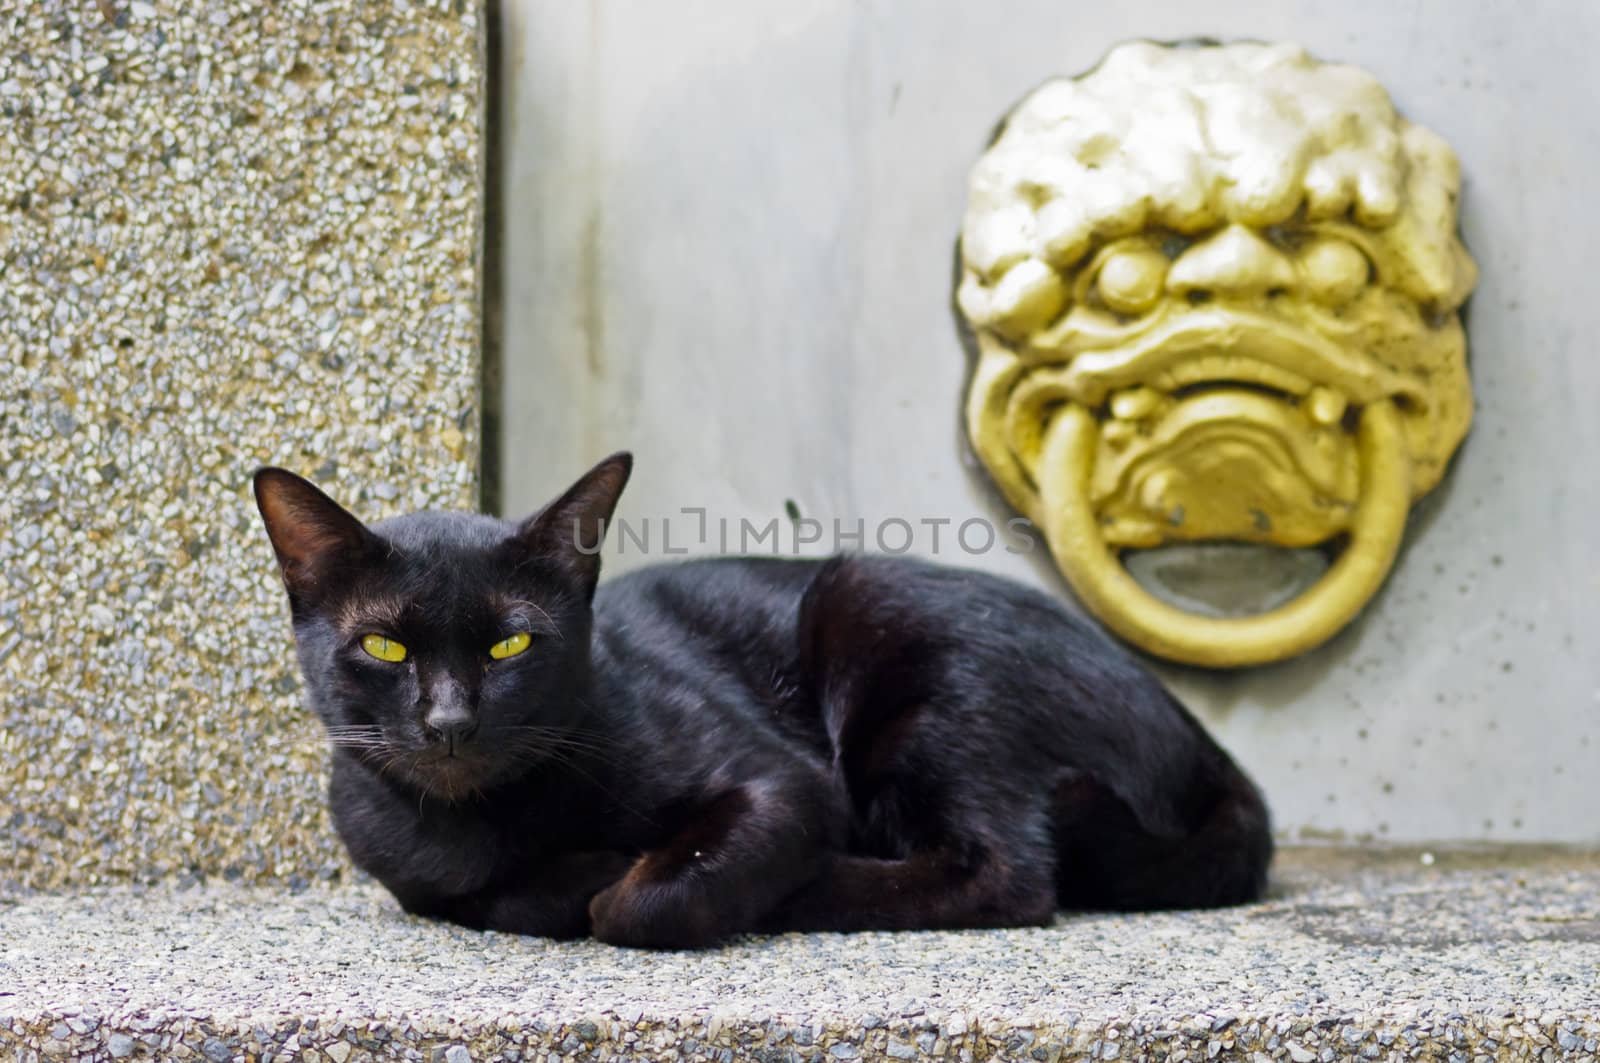 Black cat with yellow eyes sleep on concrete, Thailand